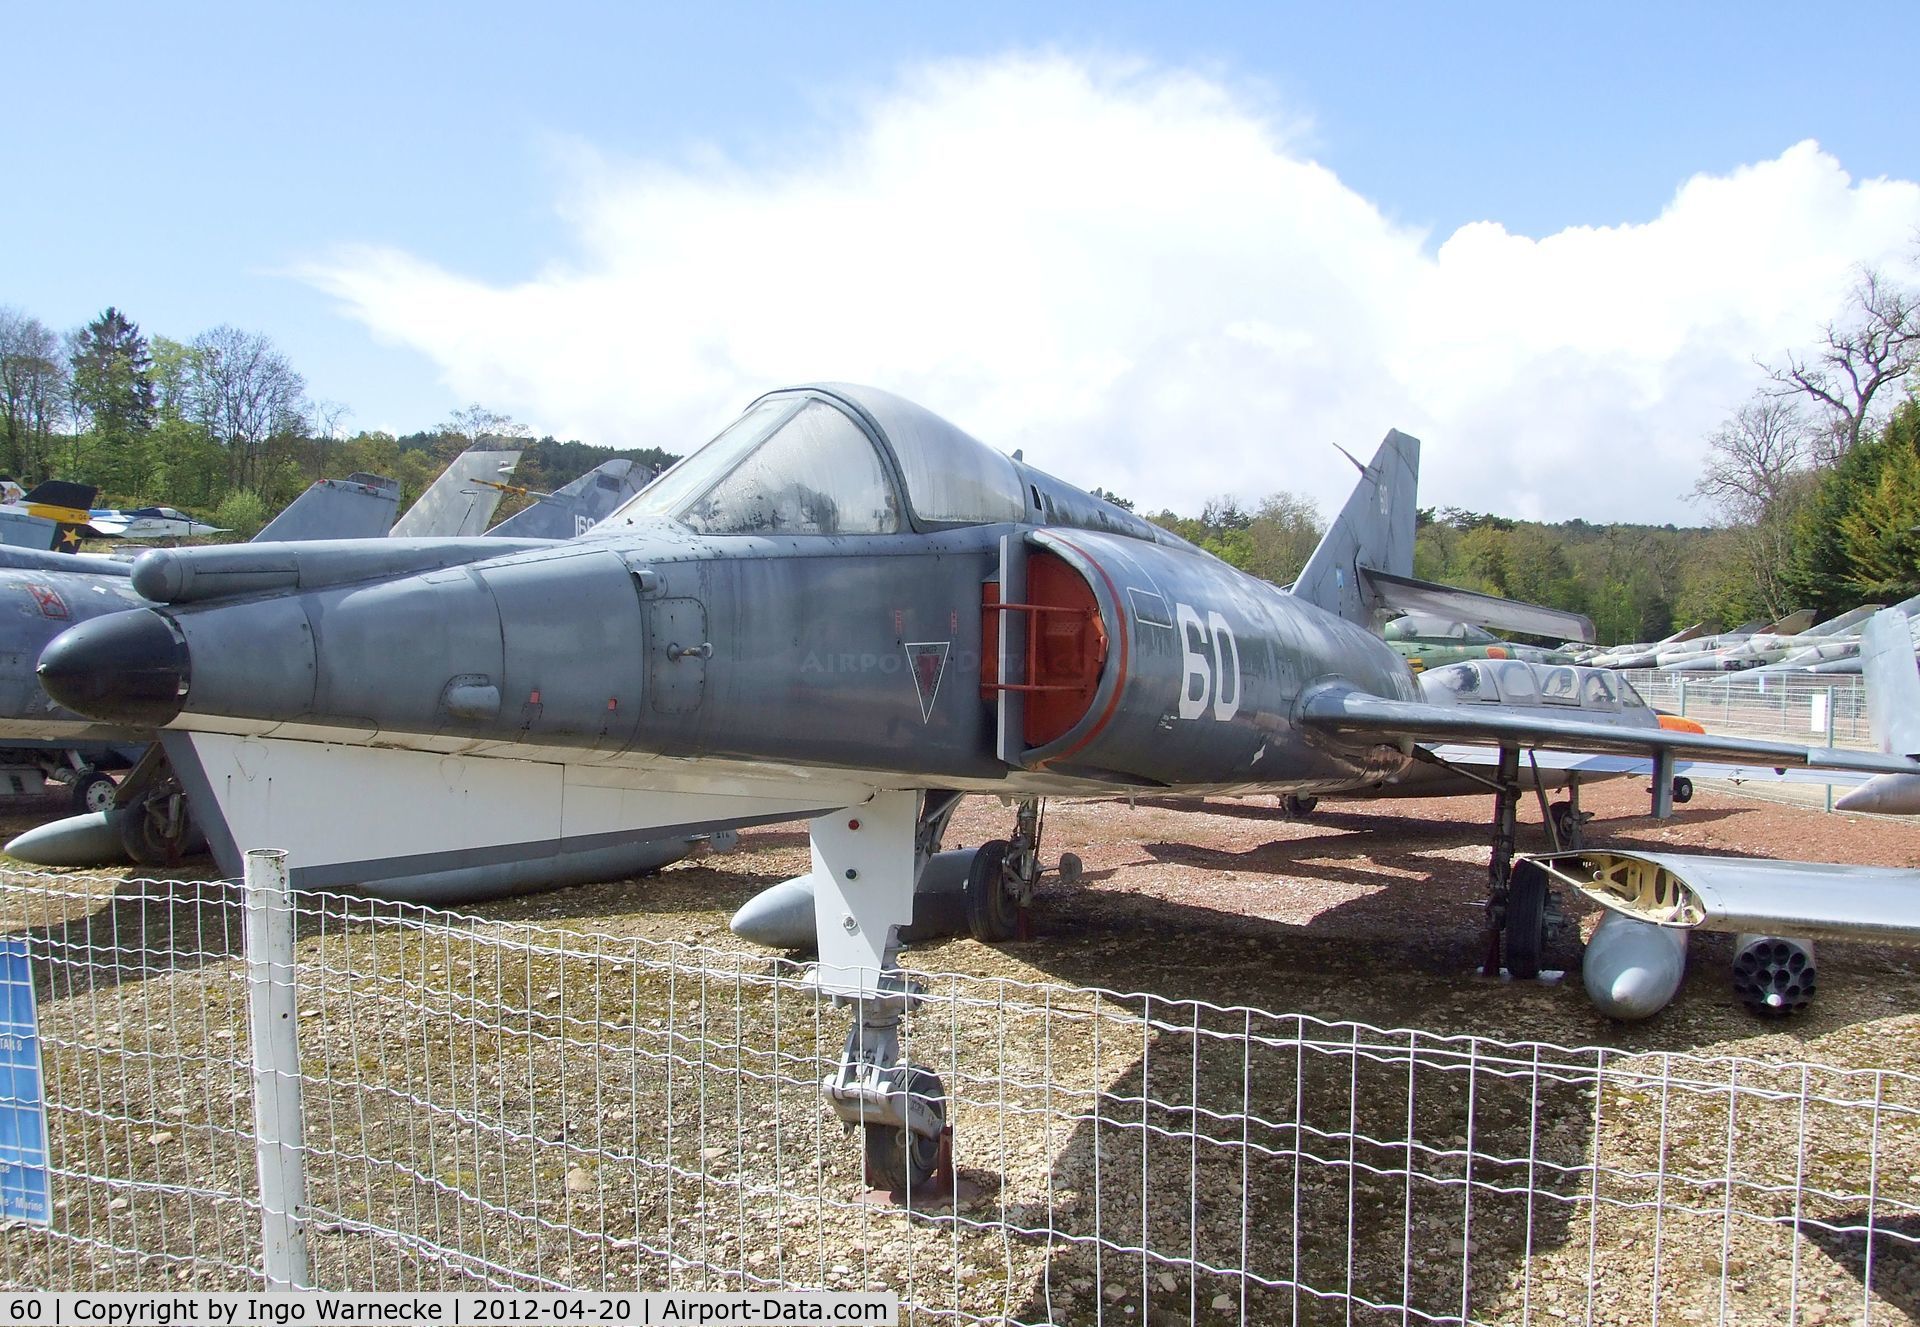 60, Dassault Etendard IV.M C/N 21, Dassault Etendard IV M at the Musee de l'Aviation du Chateau, Savigny-les-Beaune